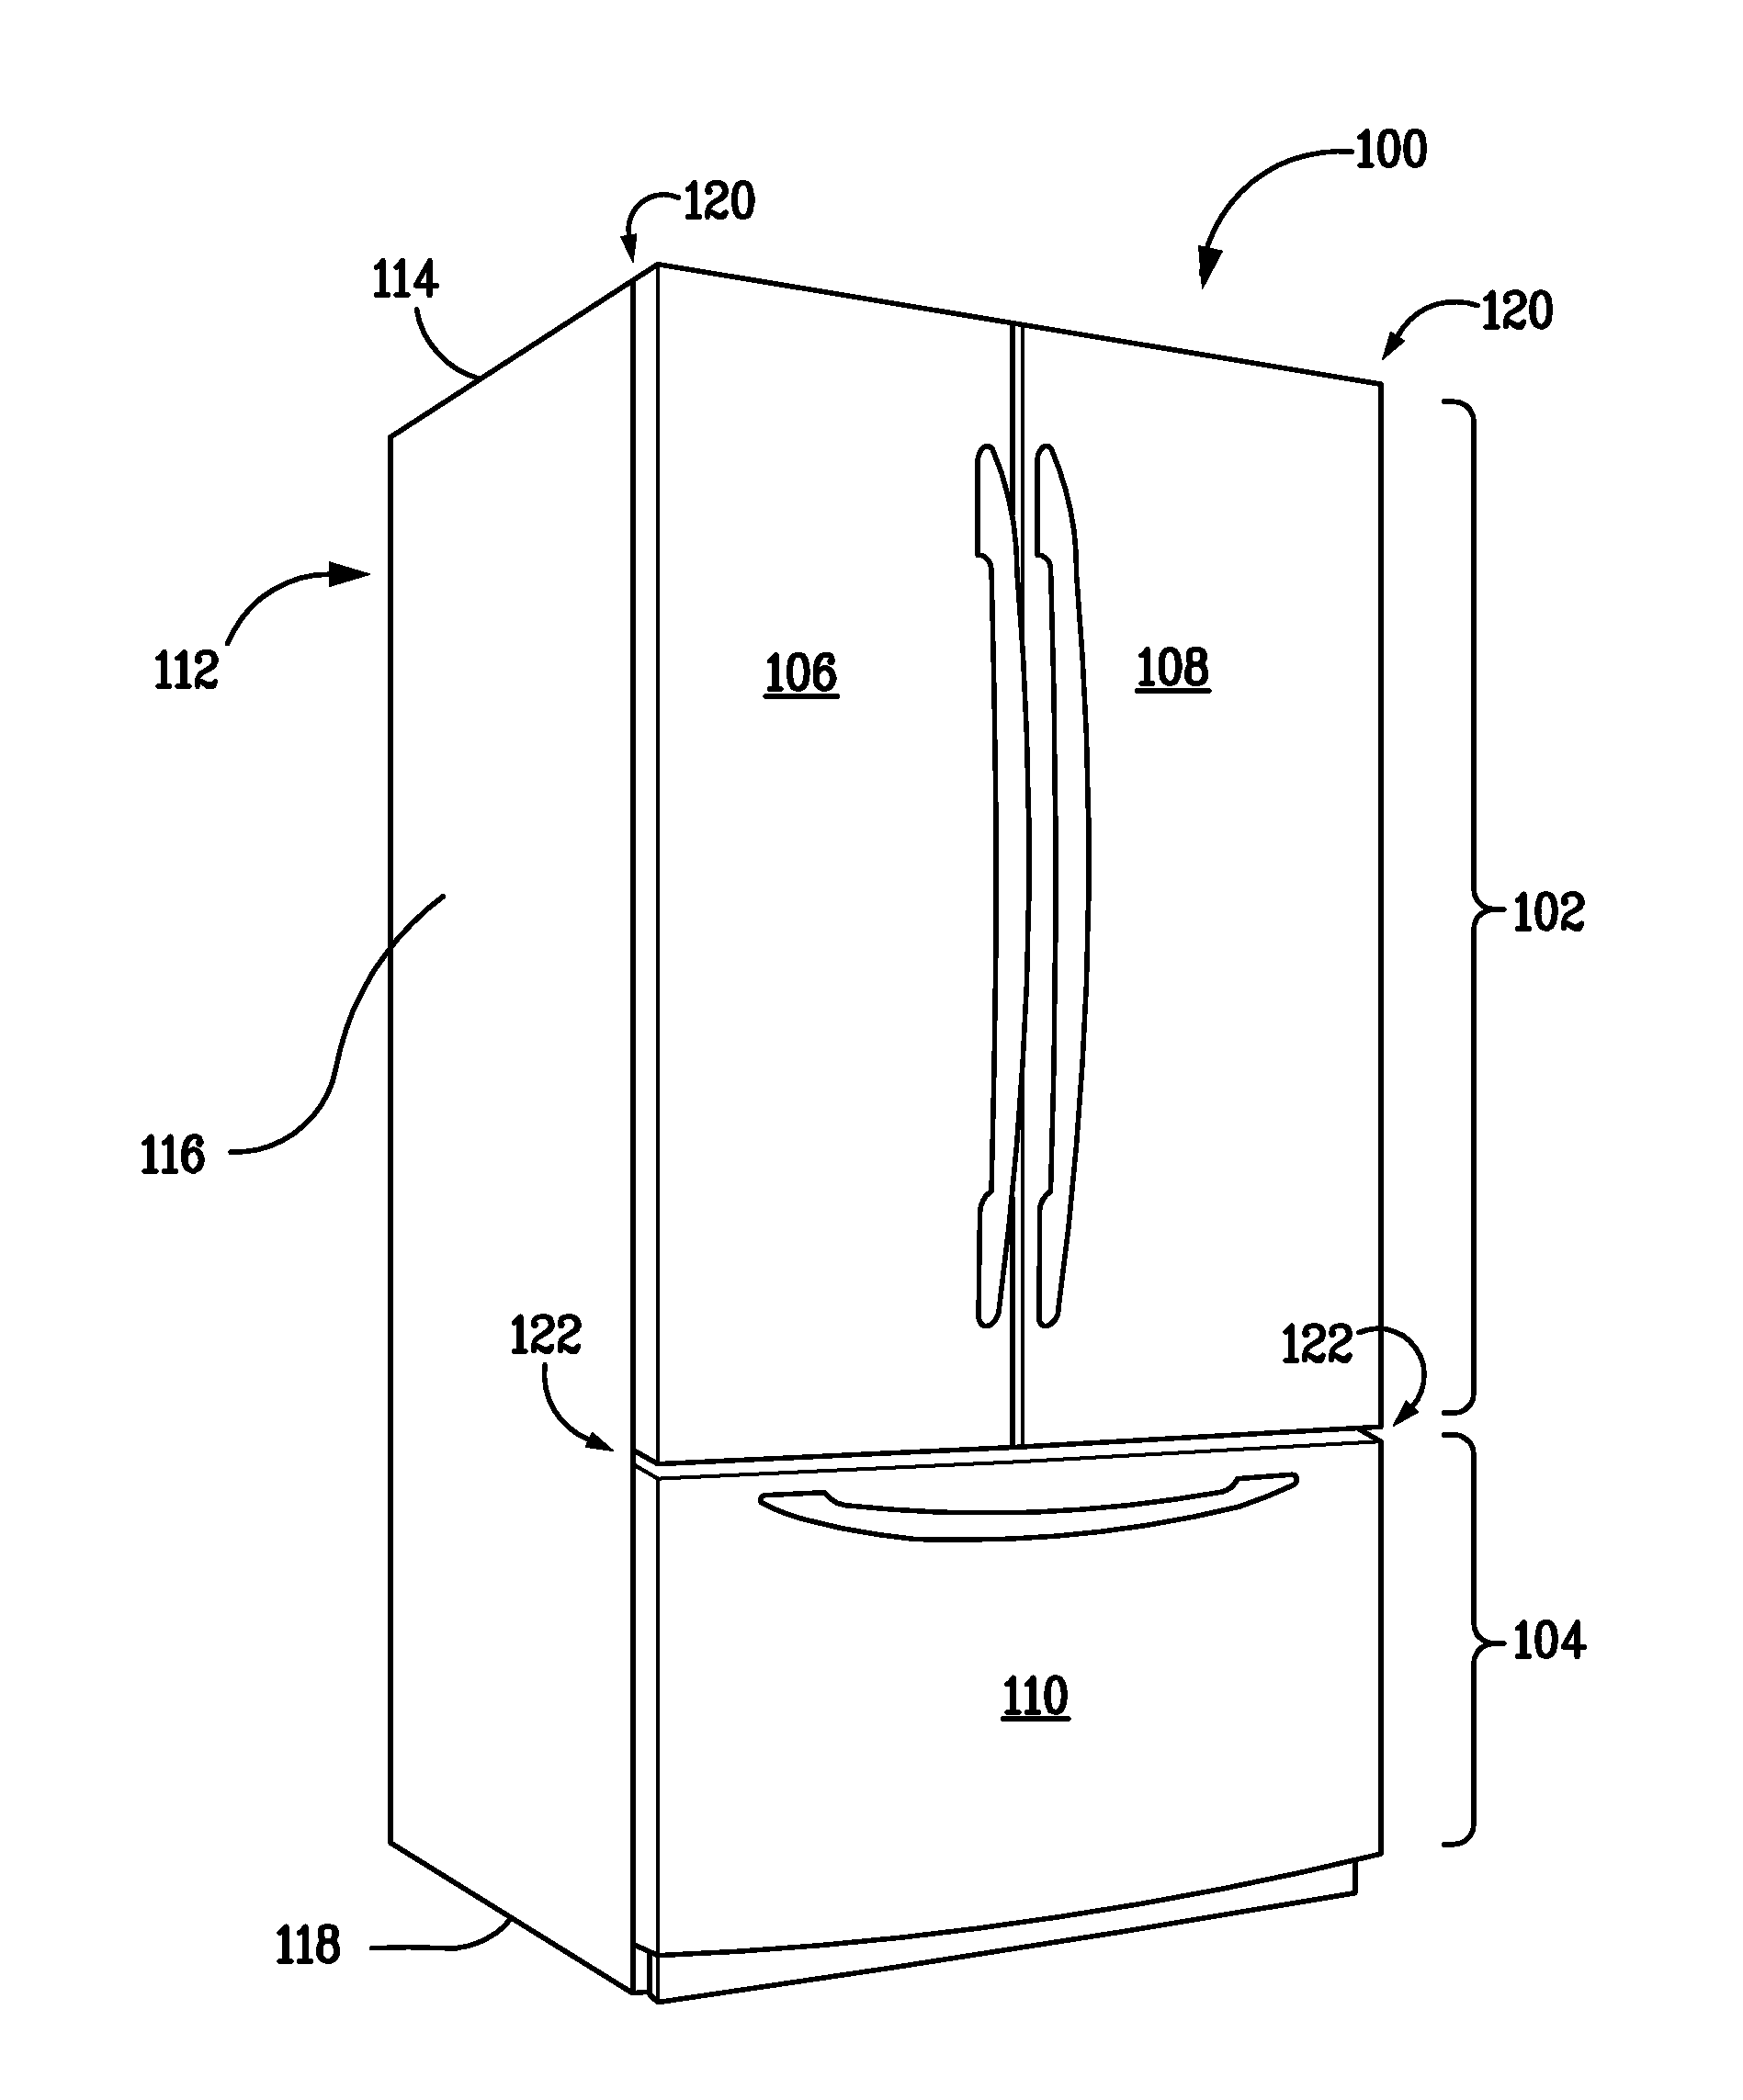 Refrigerator door mullion apparatus and system